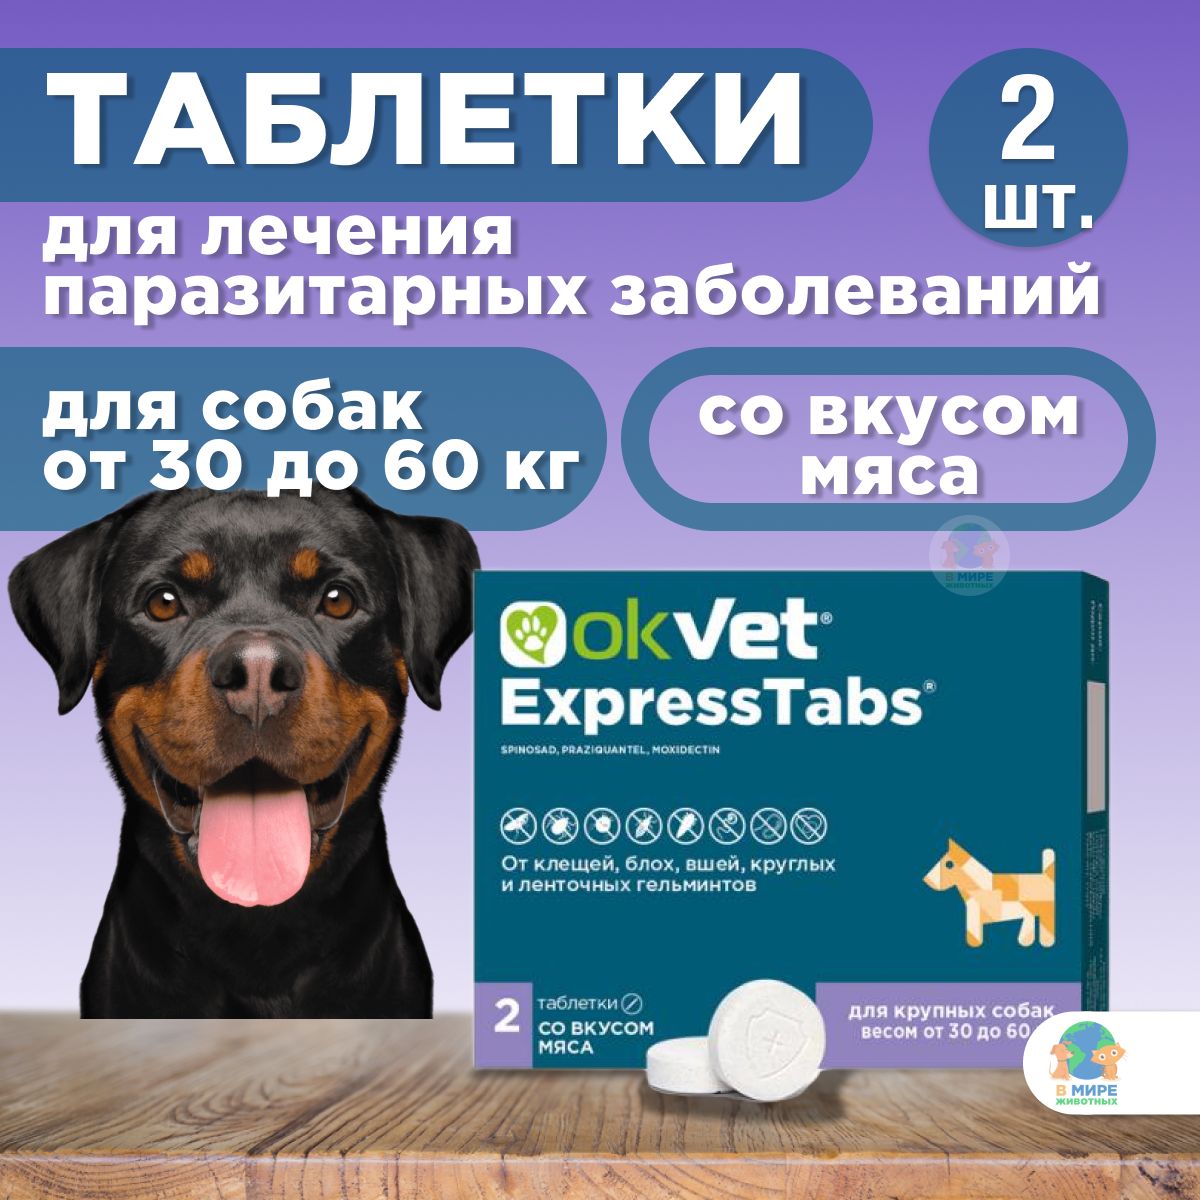 Okvet expresstabs таблетки от клещей отзывы